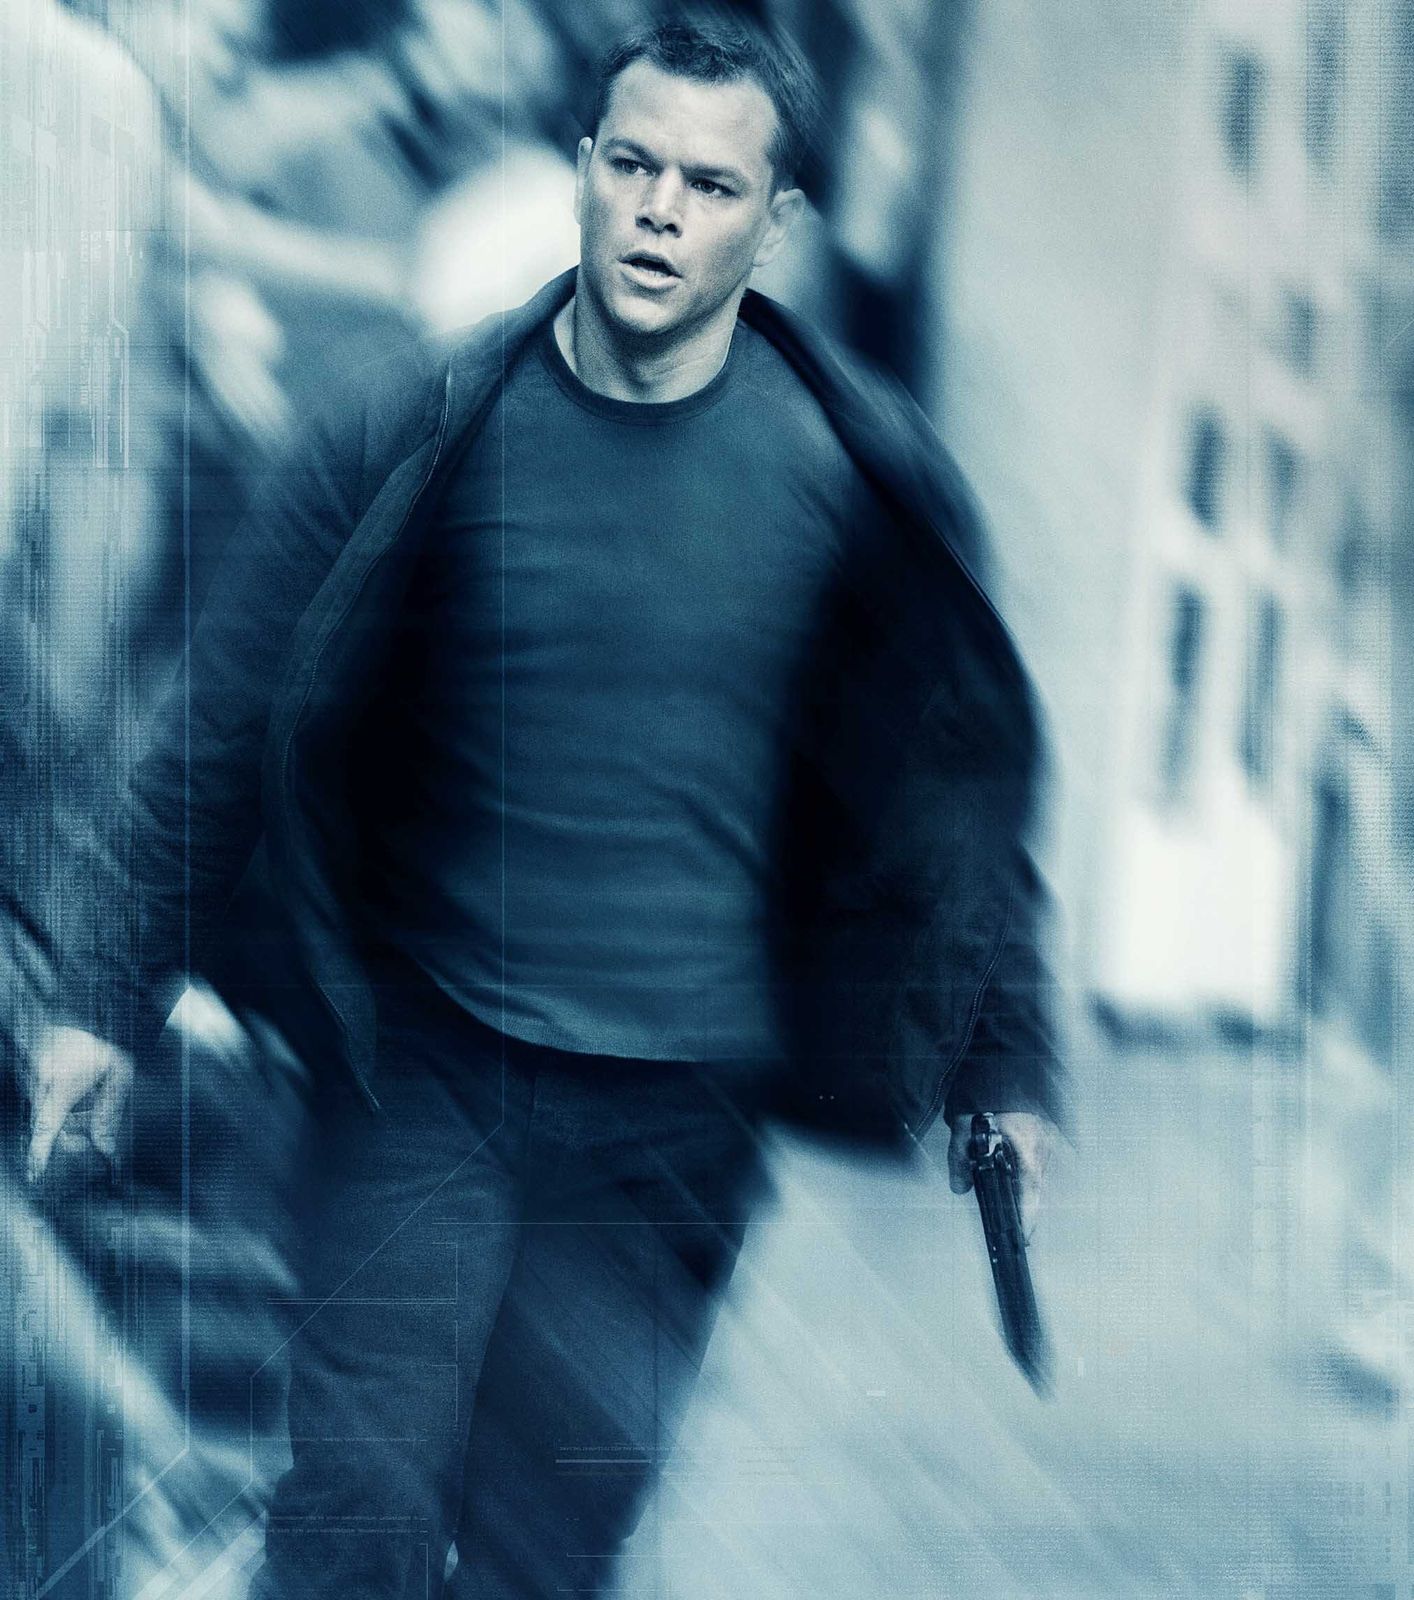 Jason Bourne Clips Revealed